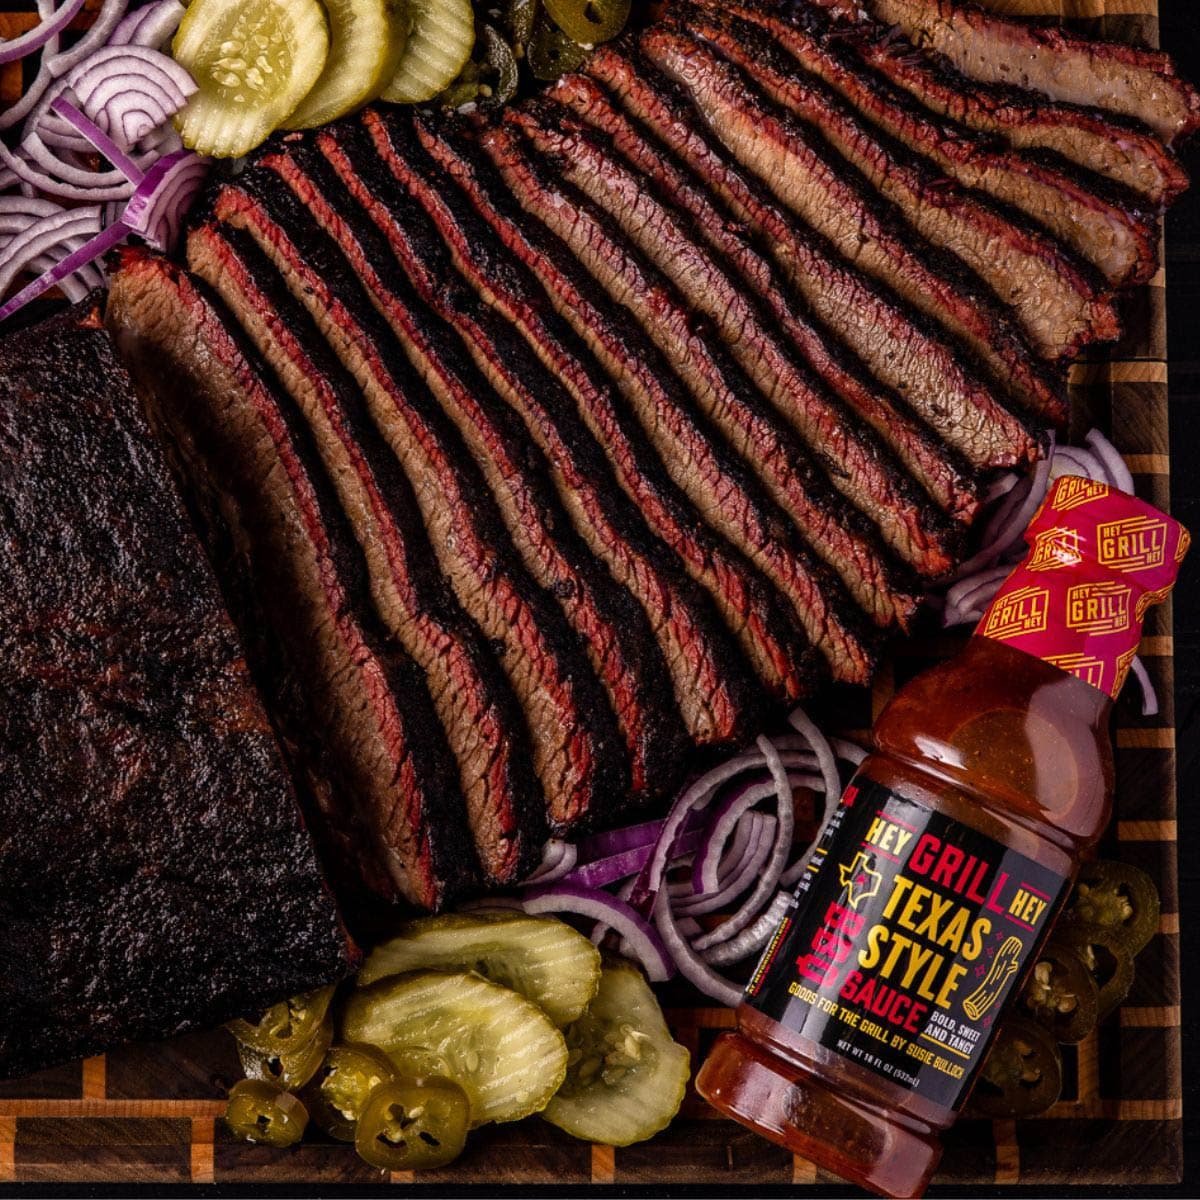 Texas Style BBQ Sauce bottle next to platter of sliced brisket.